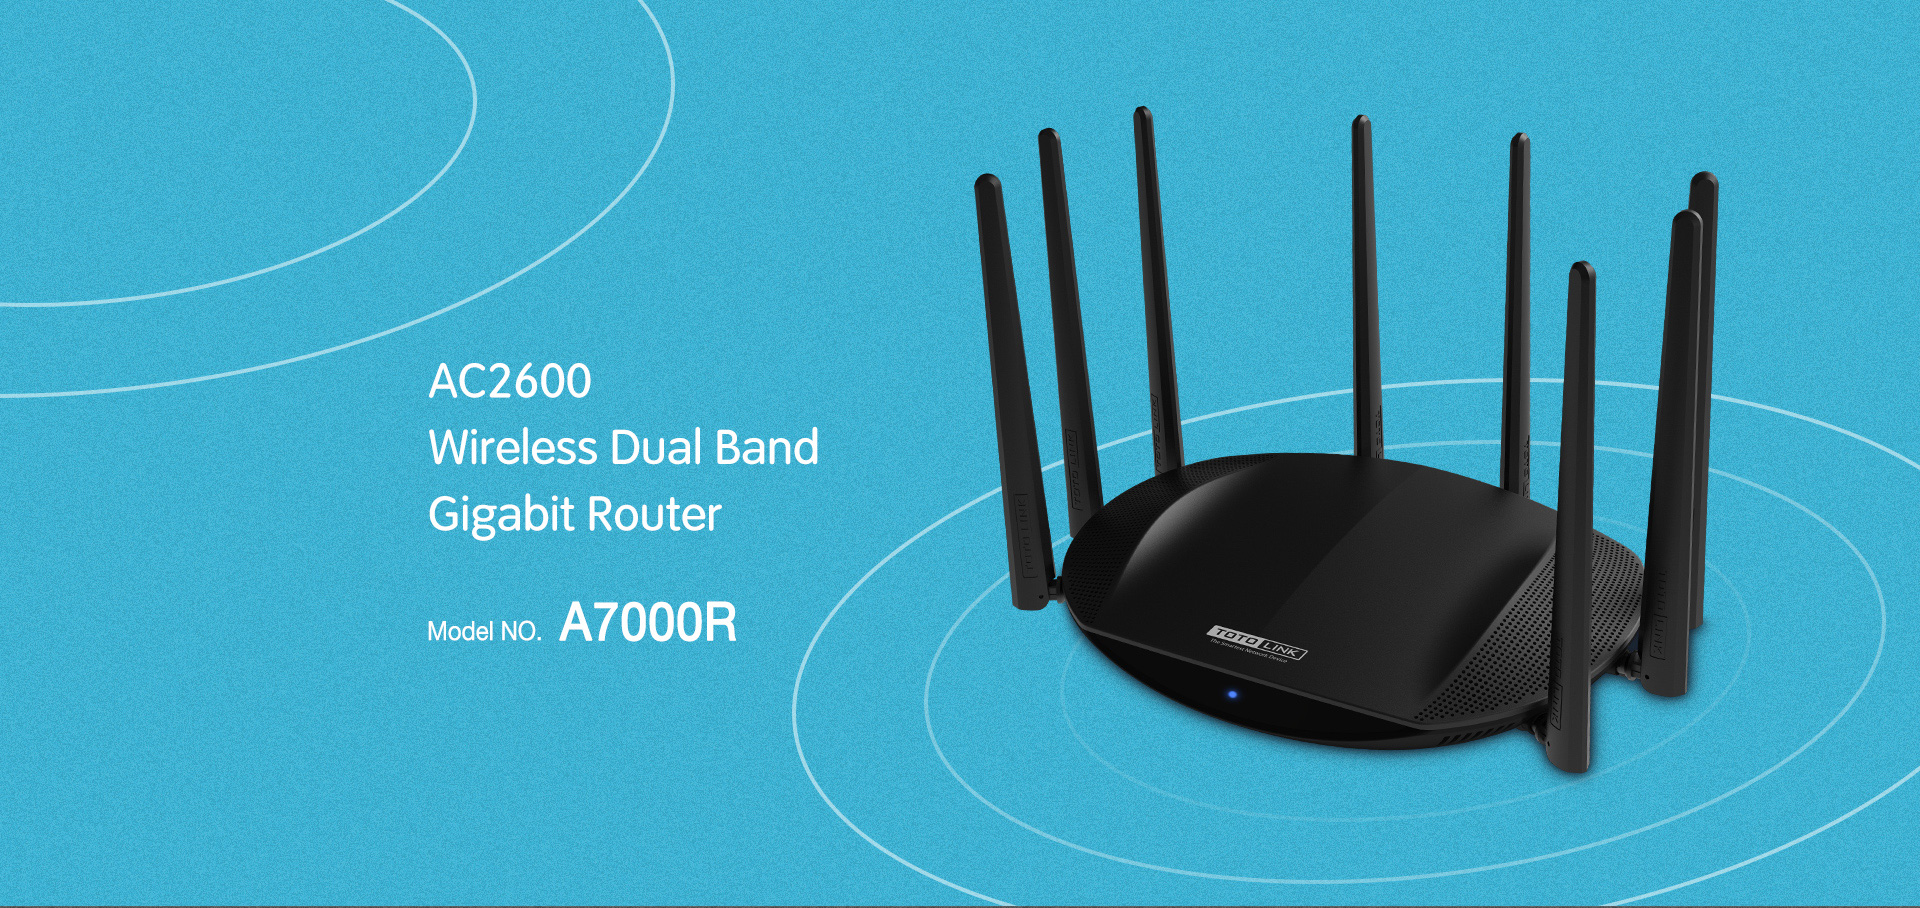 A7000R-AC2600 Wireless Dual Band Gigabit Router